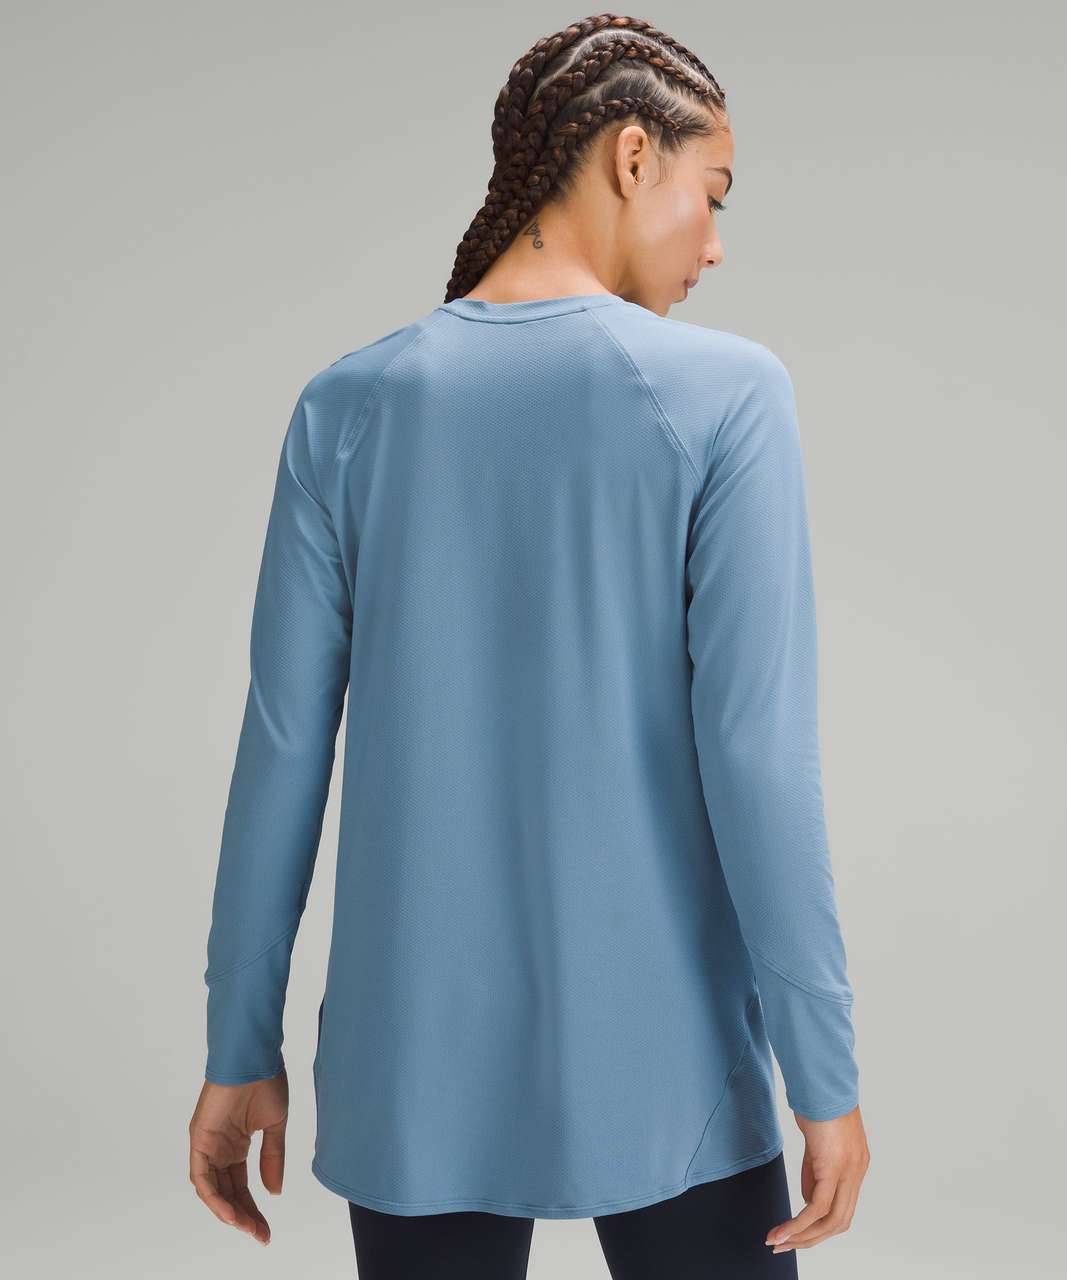 Lululemon Abrasion-Resistant High-Coverage Long-Sleeve Shirt - Utility Blue